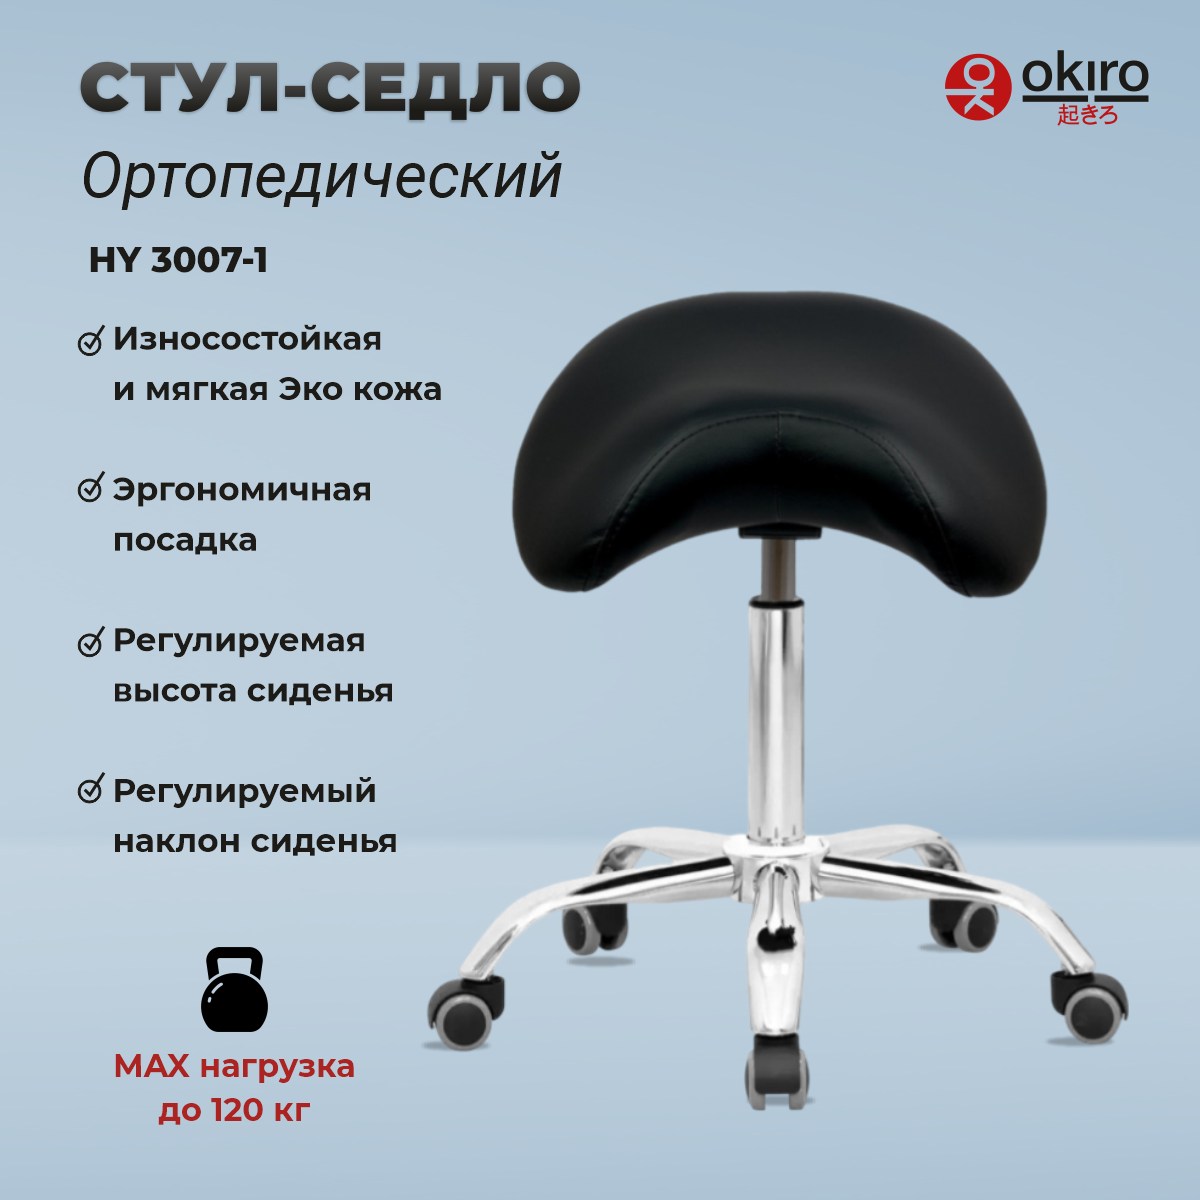 OKIRO / Стул-седло для мастера на колесах HY 3007-1 BL , стул для косметолога, ортопедический стул